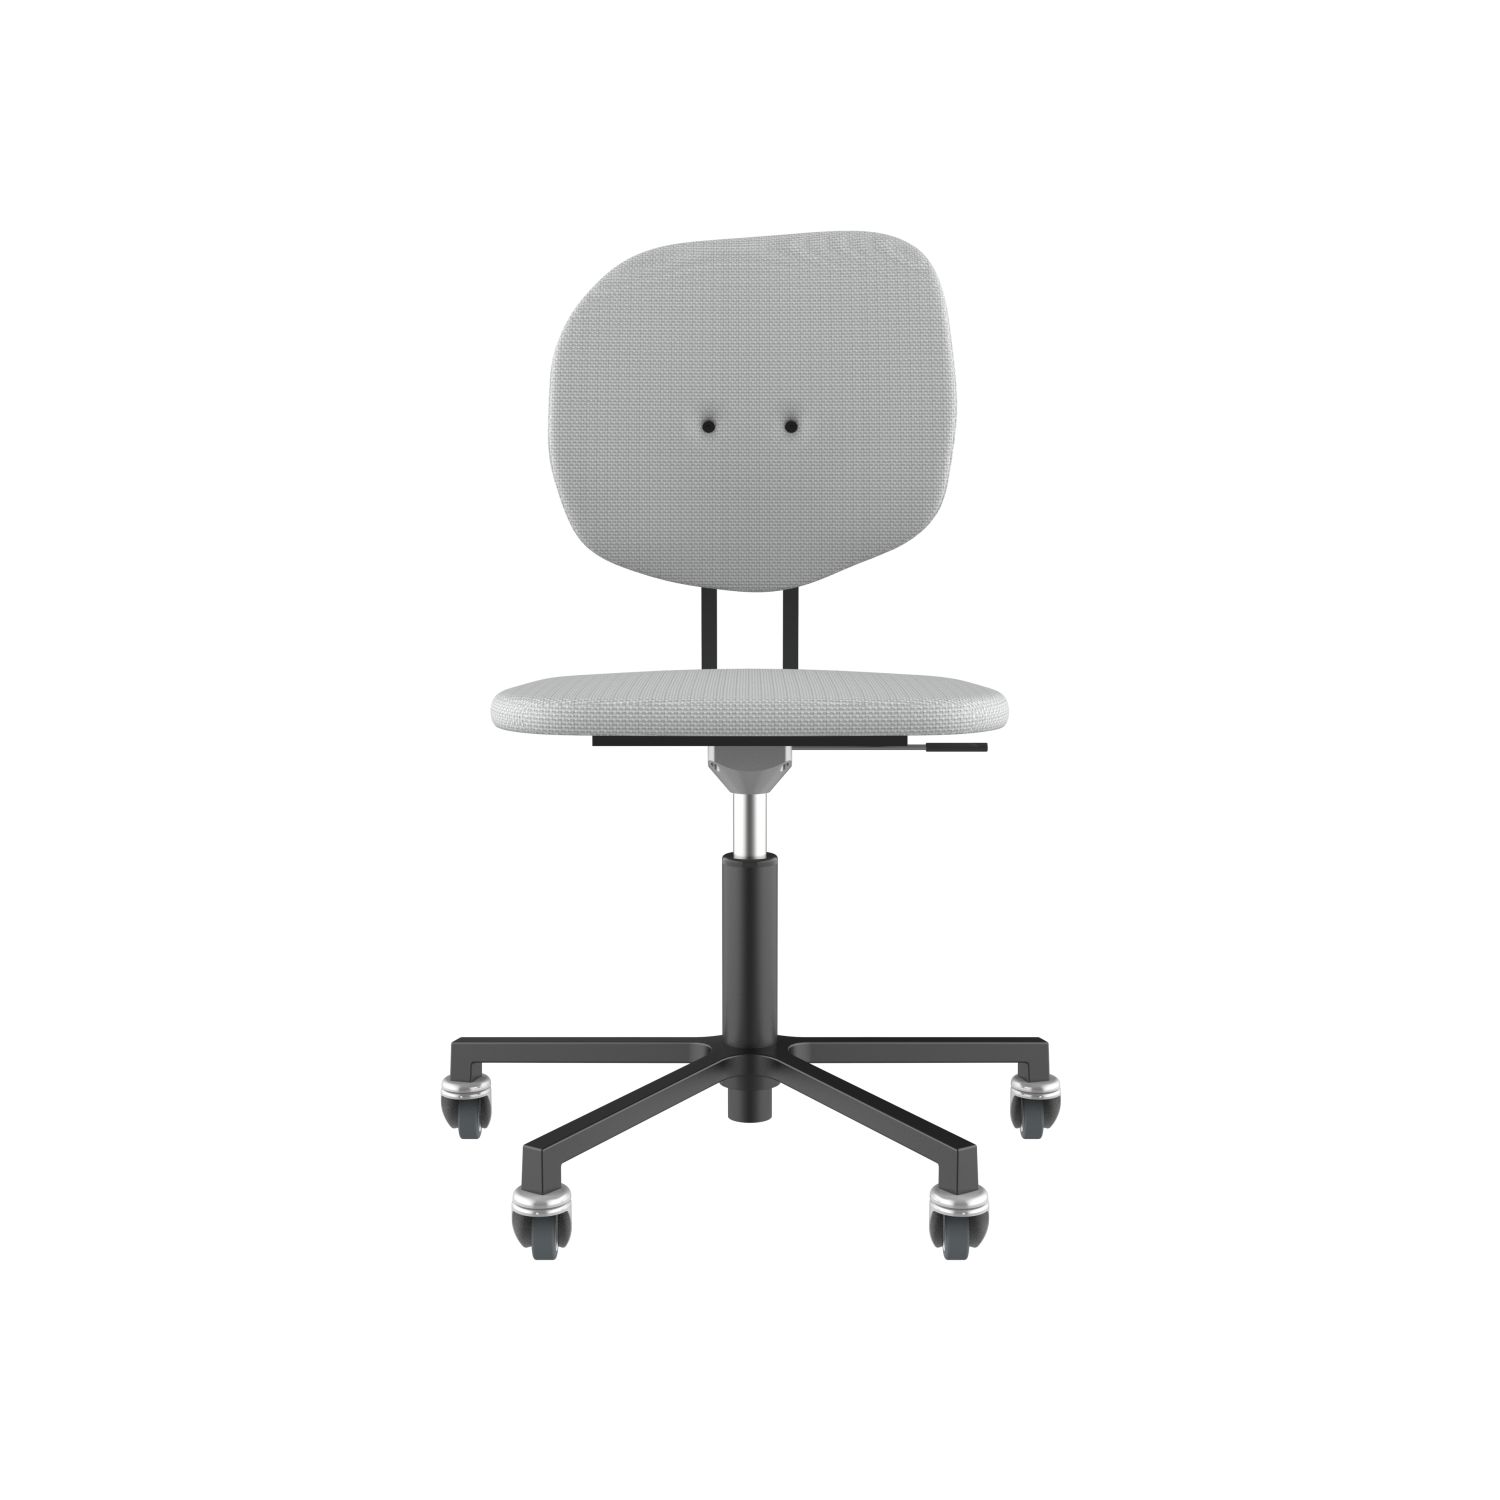 lensvelt maarten baas office chair without armrests backrest h breeze light grey 171 black ral9005 soft wheels